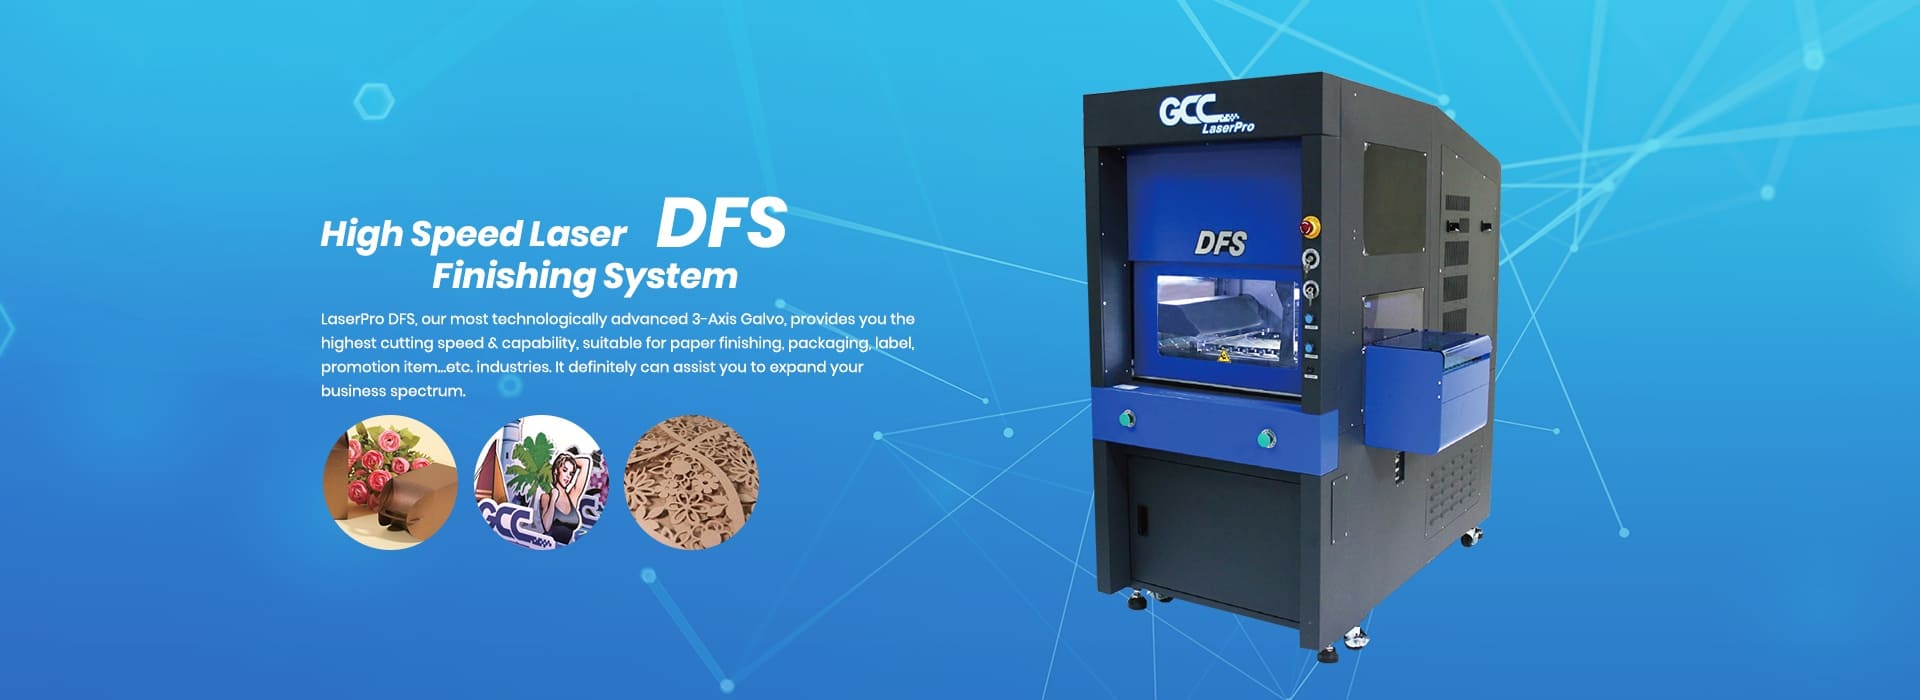 GCC DFS 提供於印刷產品的高速雷射系統